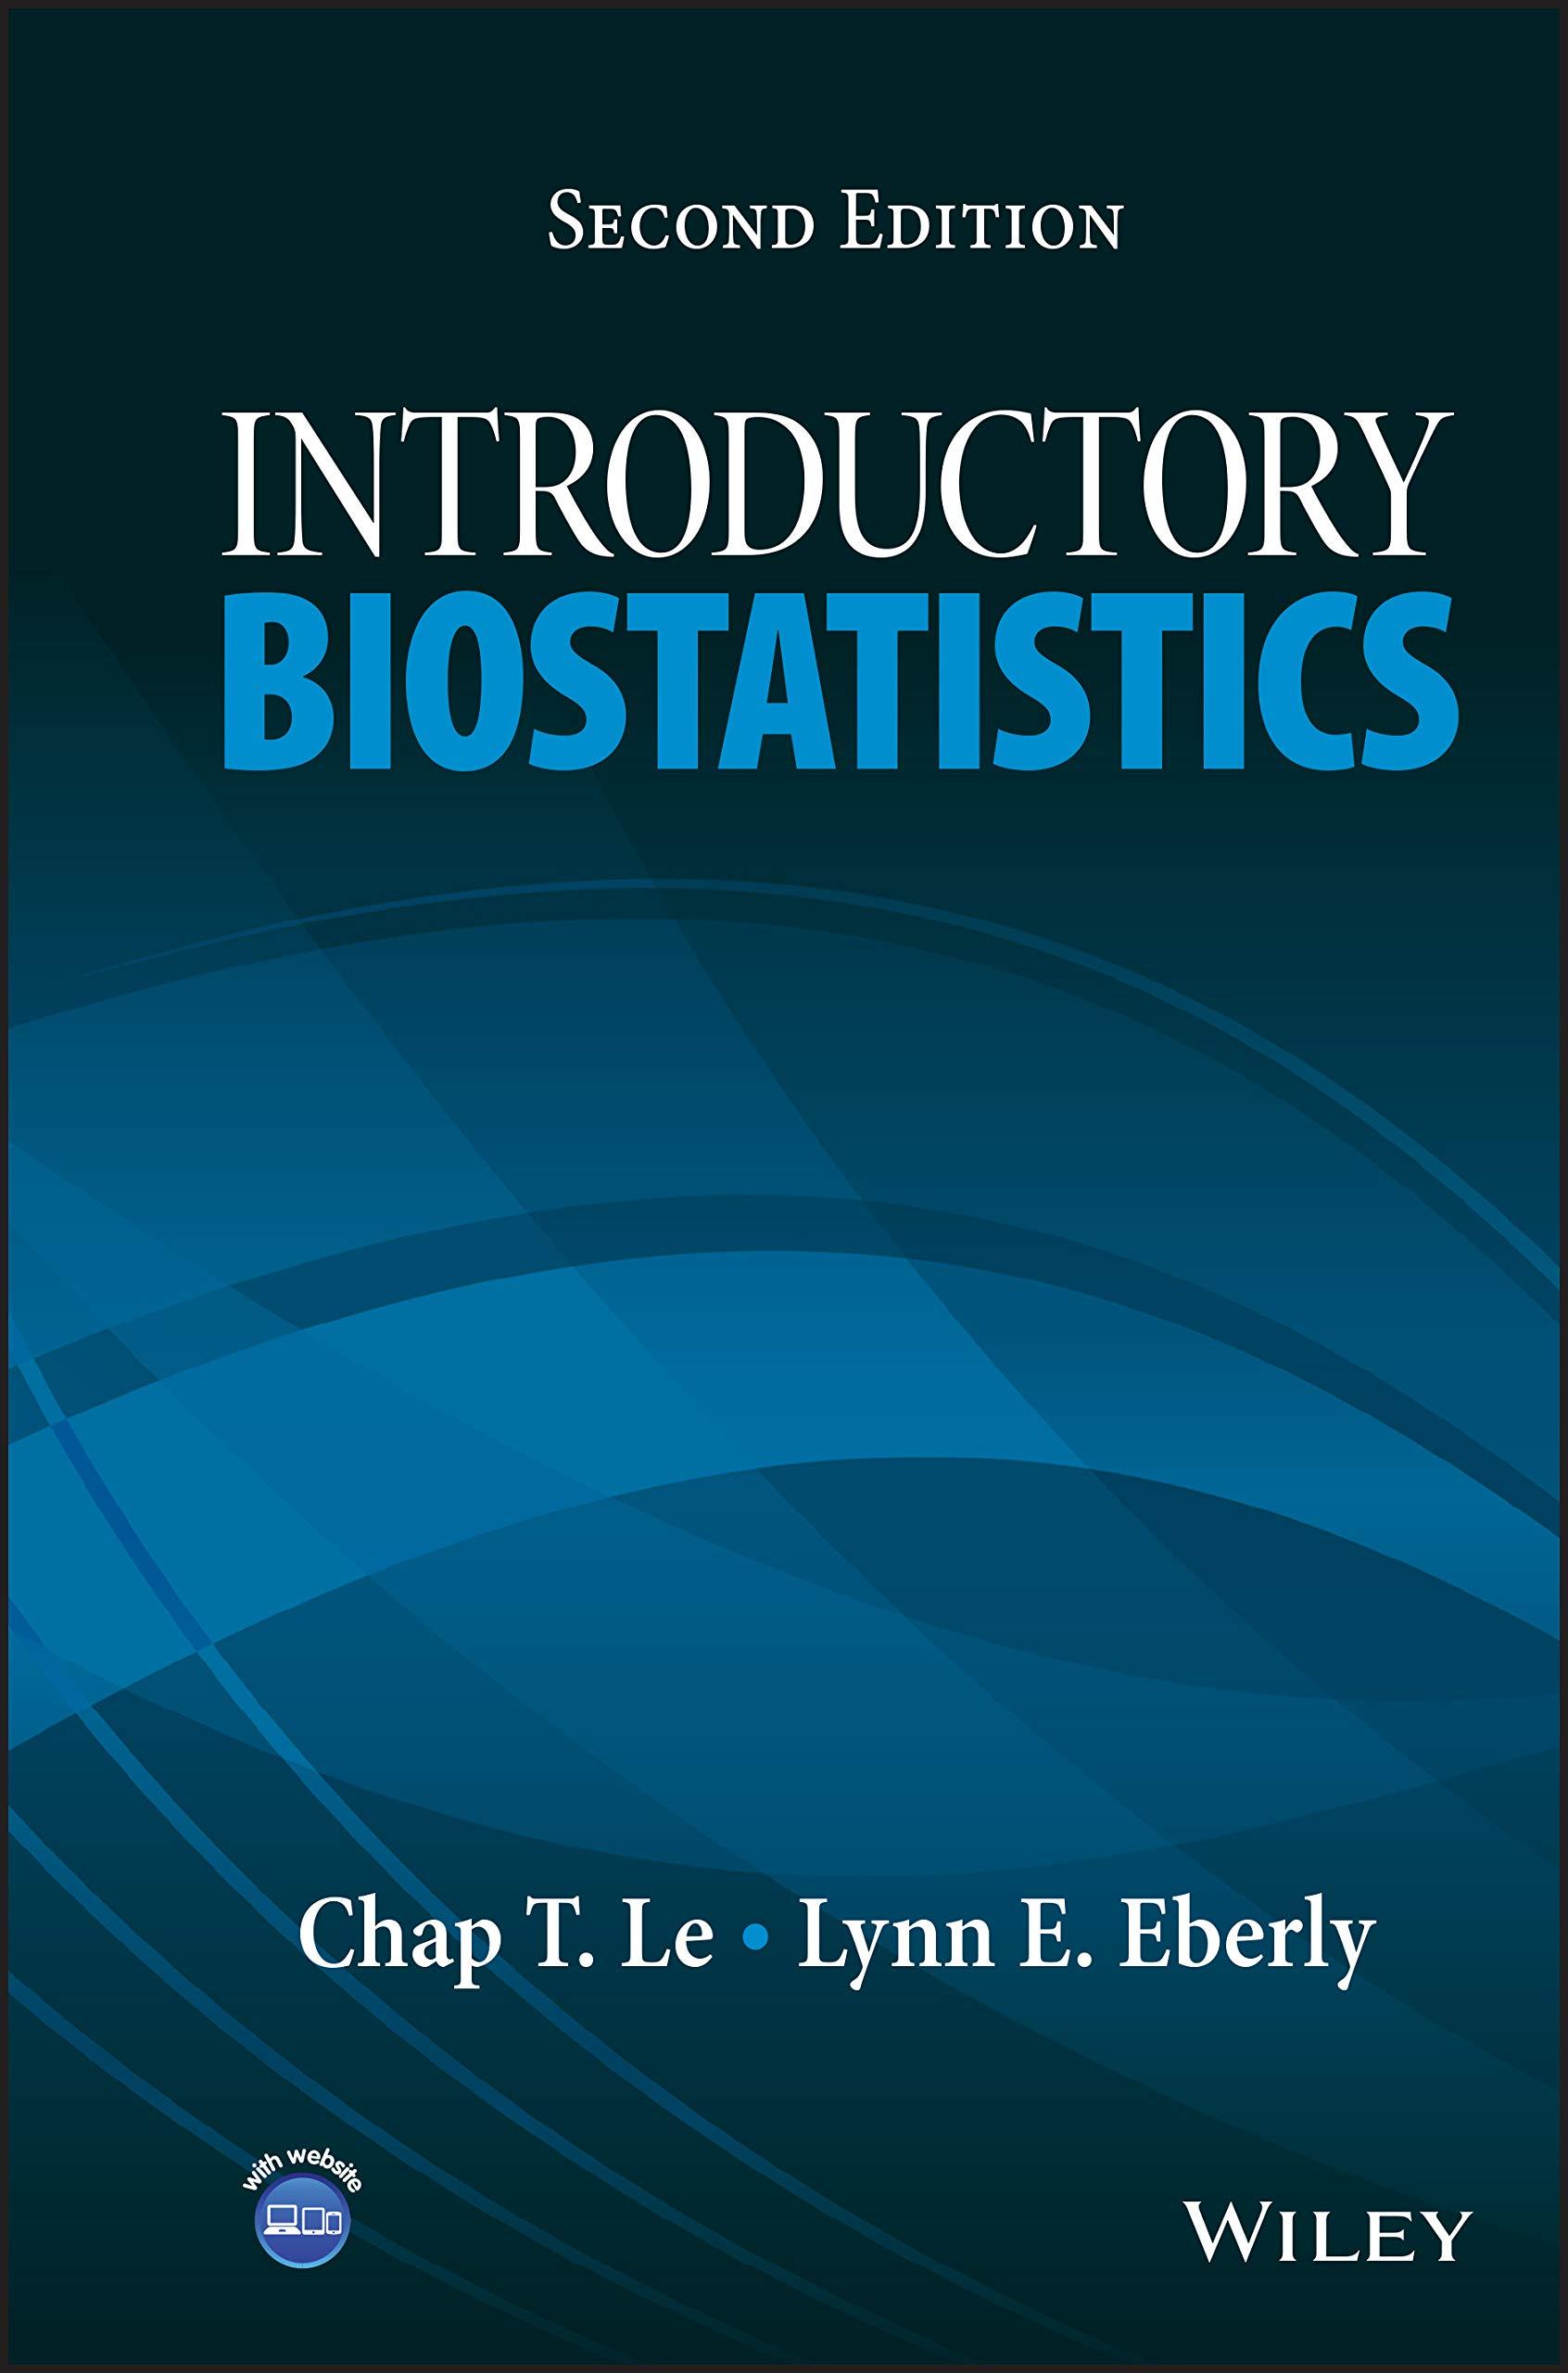 introductory biostatistics 2nd edition chap t. le, lynn e. eberly 0470905409, 978-0470905401